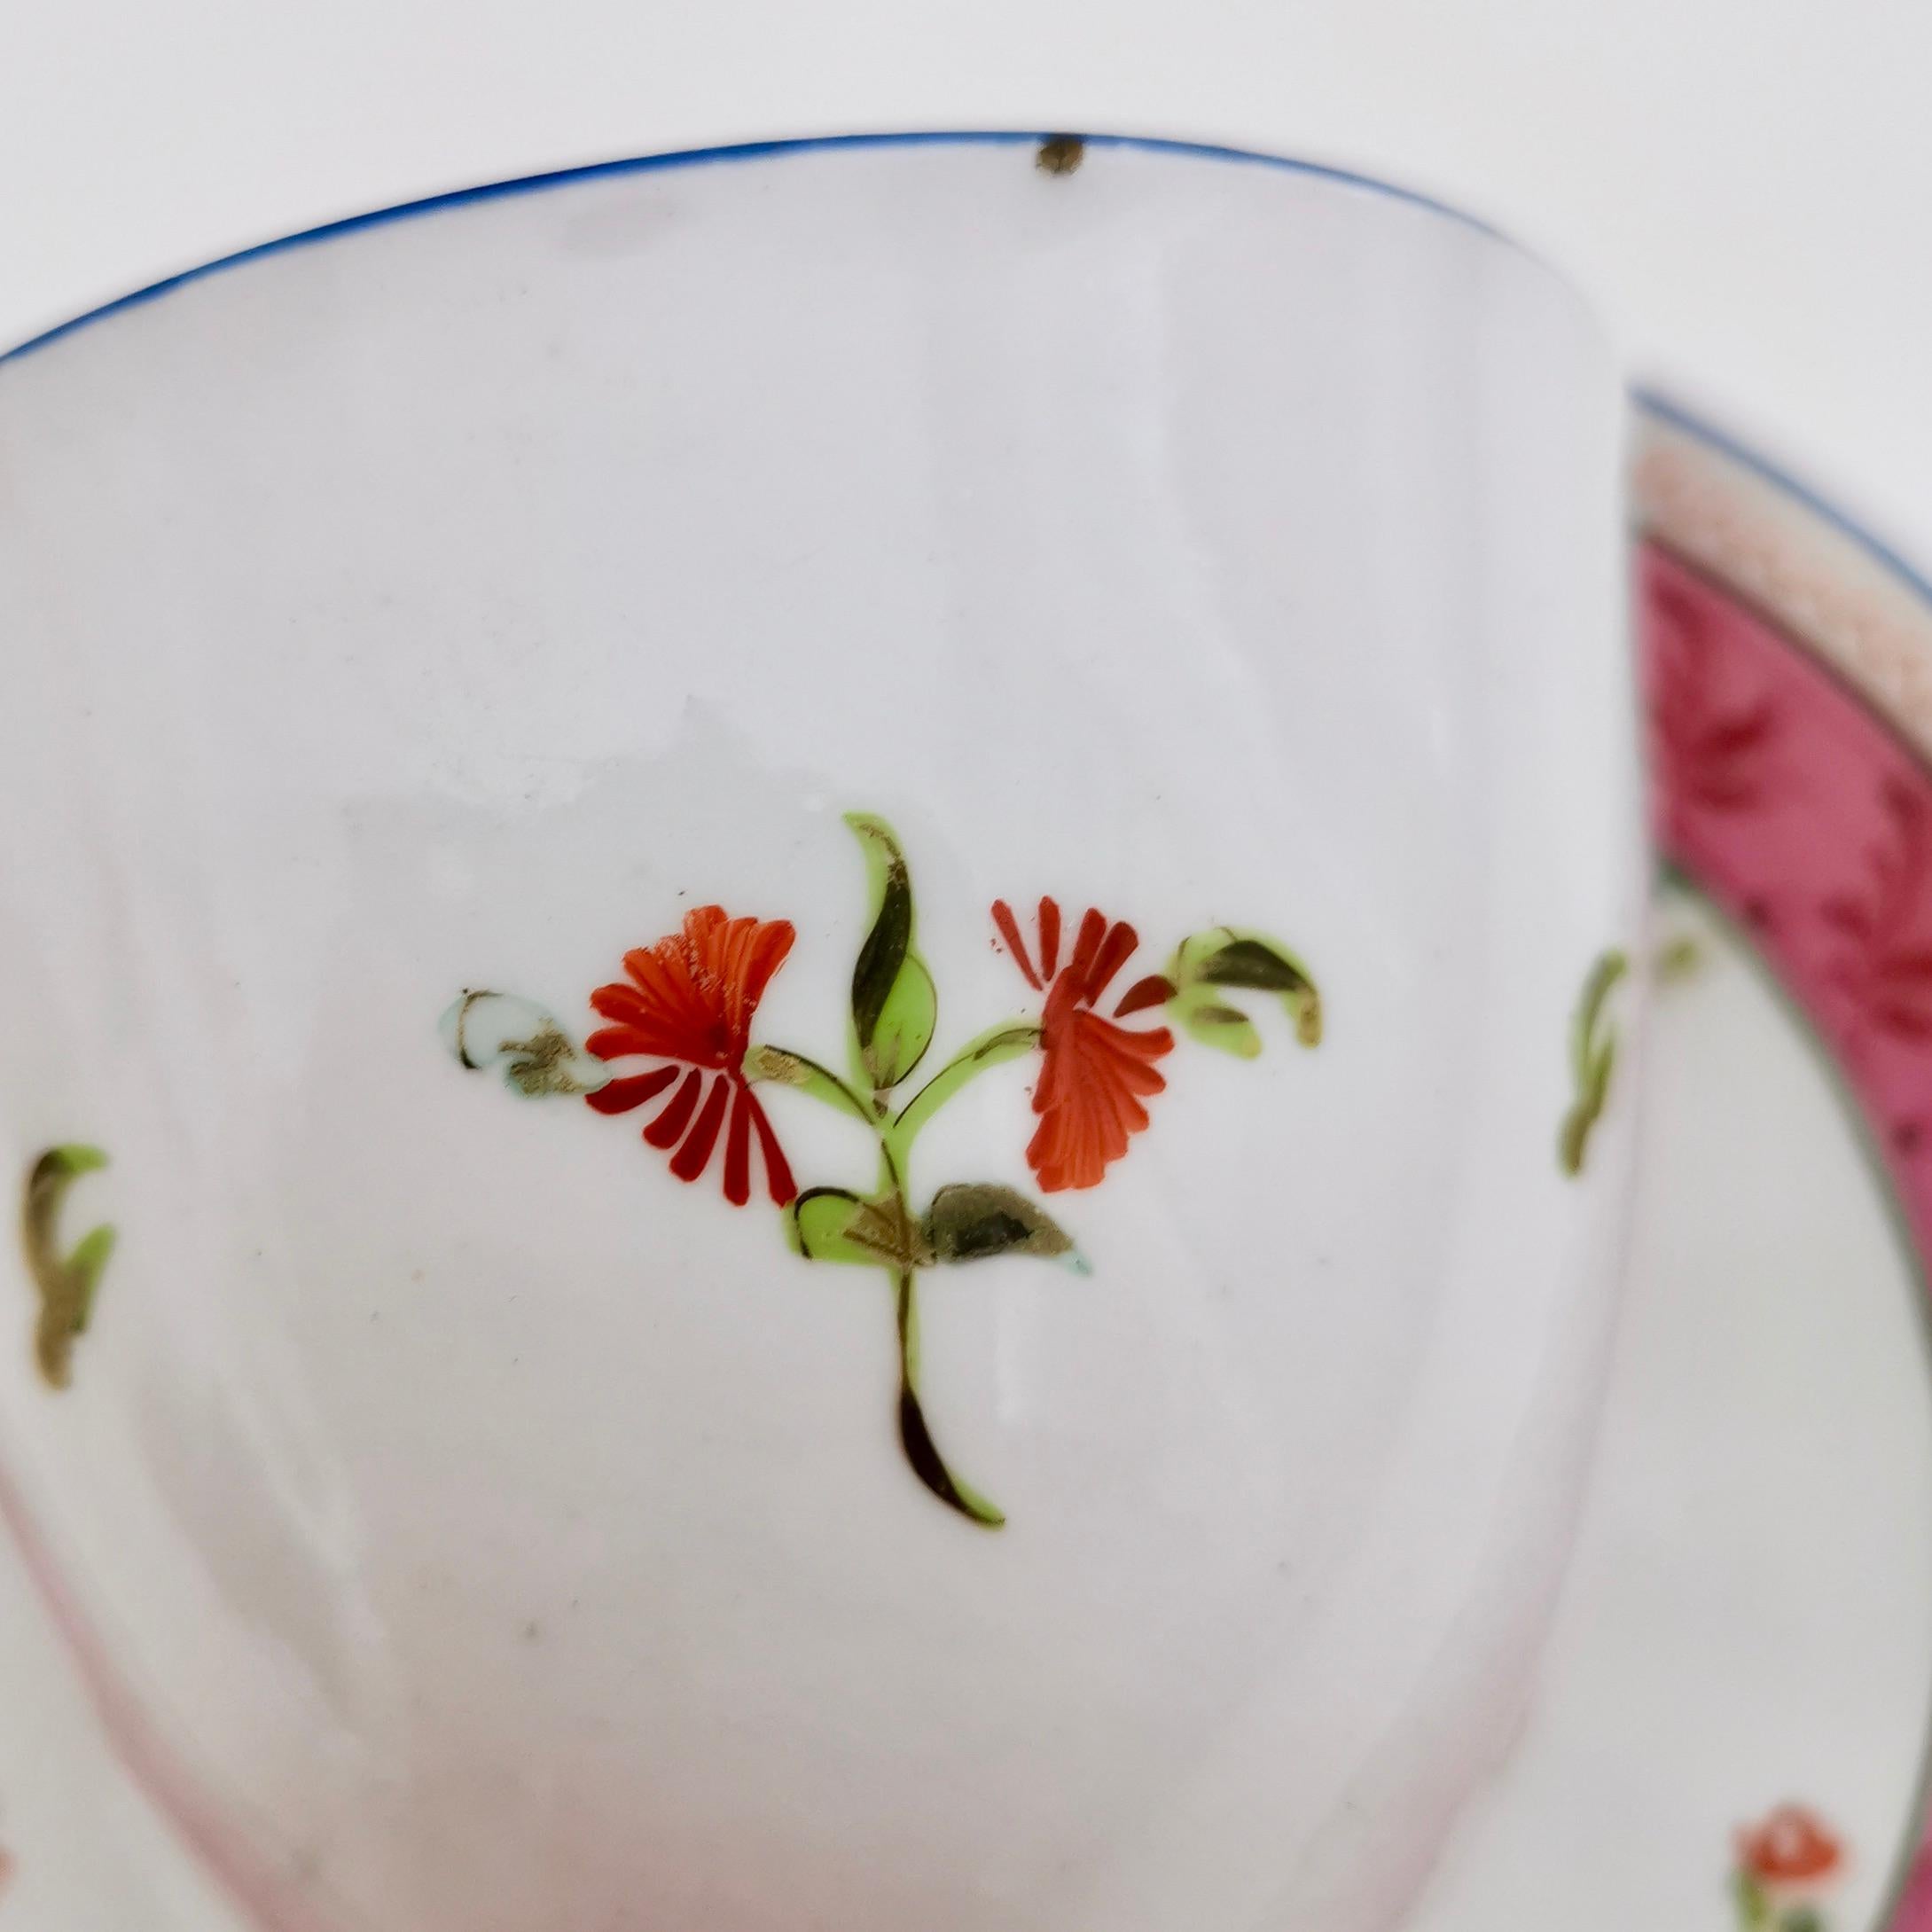 New Hall Porcelain Teacup, Hybrid Paste, Flowers Patt, 1180, circa 1815 6